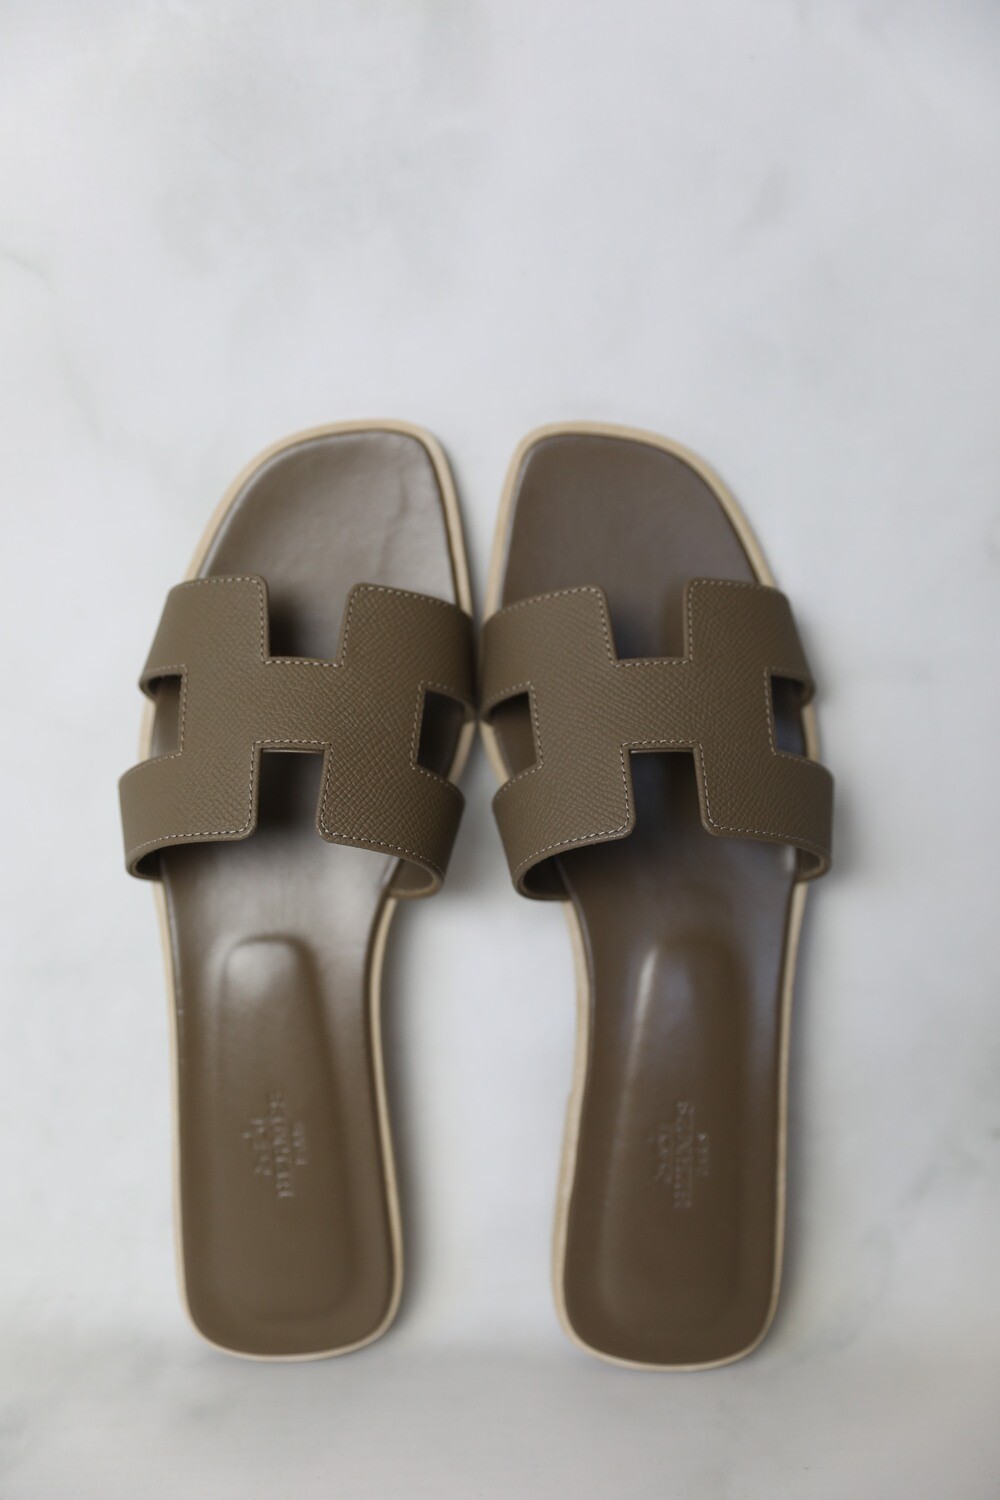 Hermes Oran Slide Sandals, Etoupe, New in Box